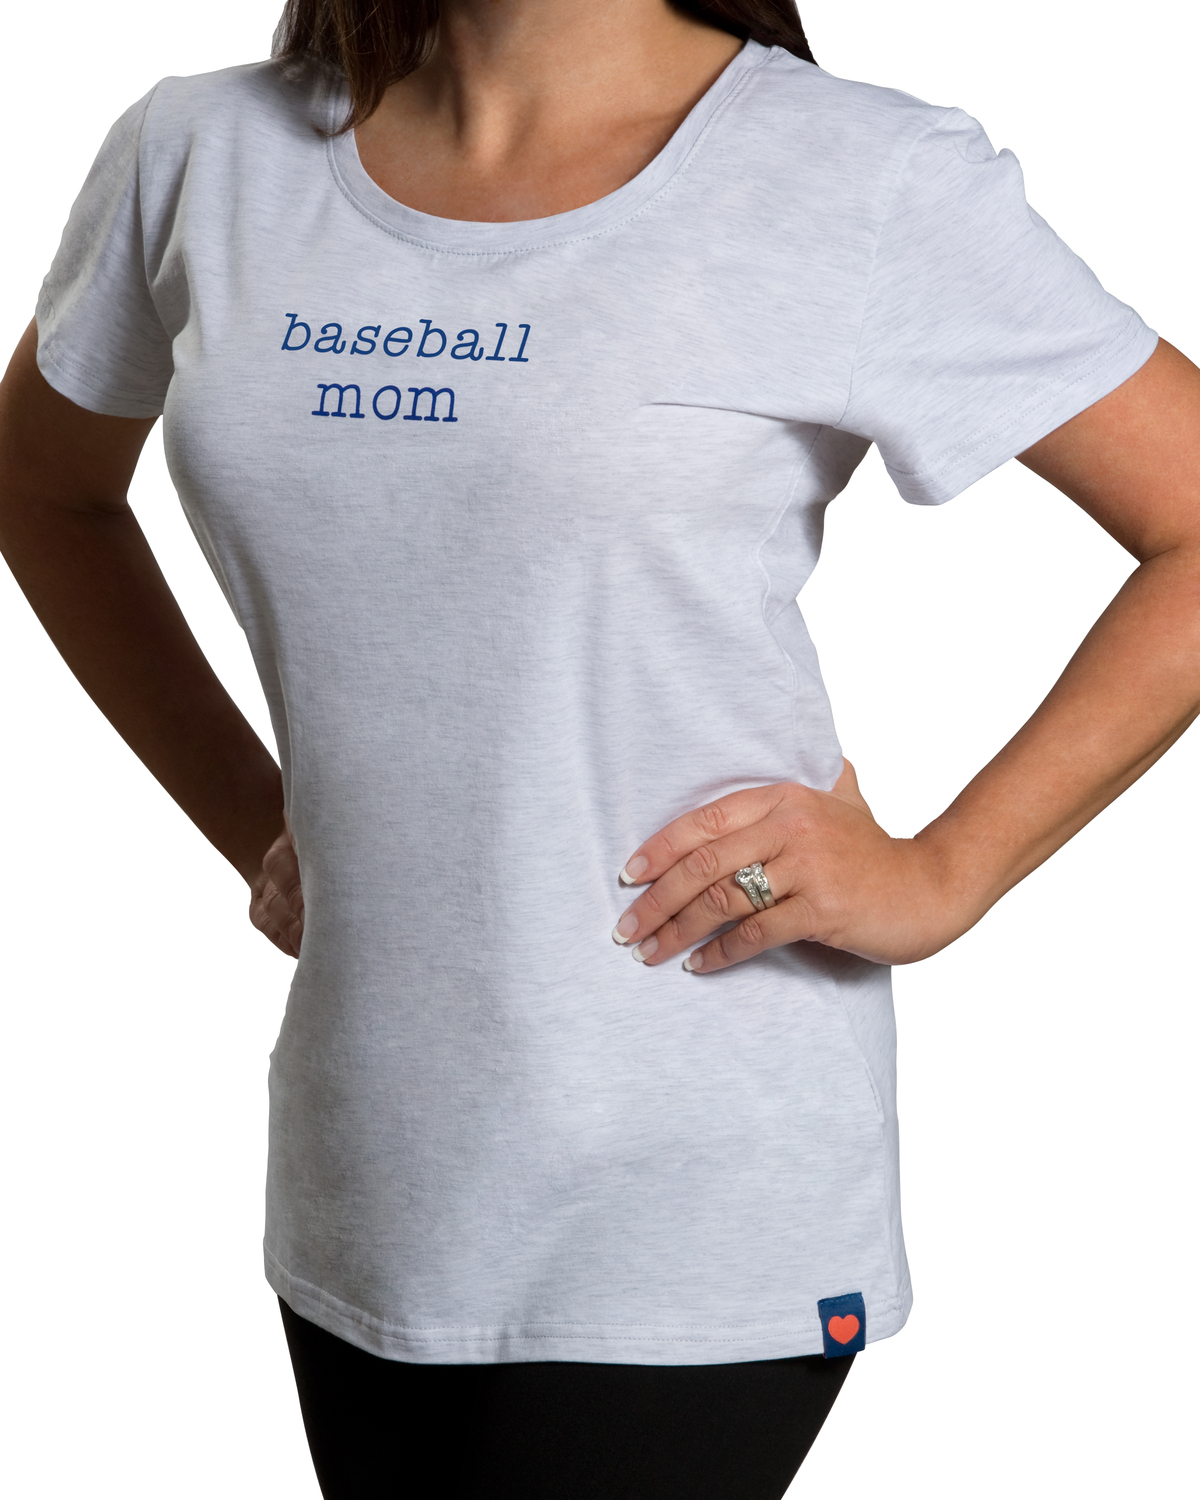 Baseball Mom by Mom Love - Baseball Mom - Small Gray T-Shirt